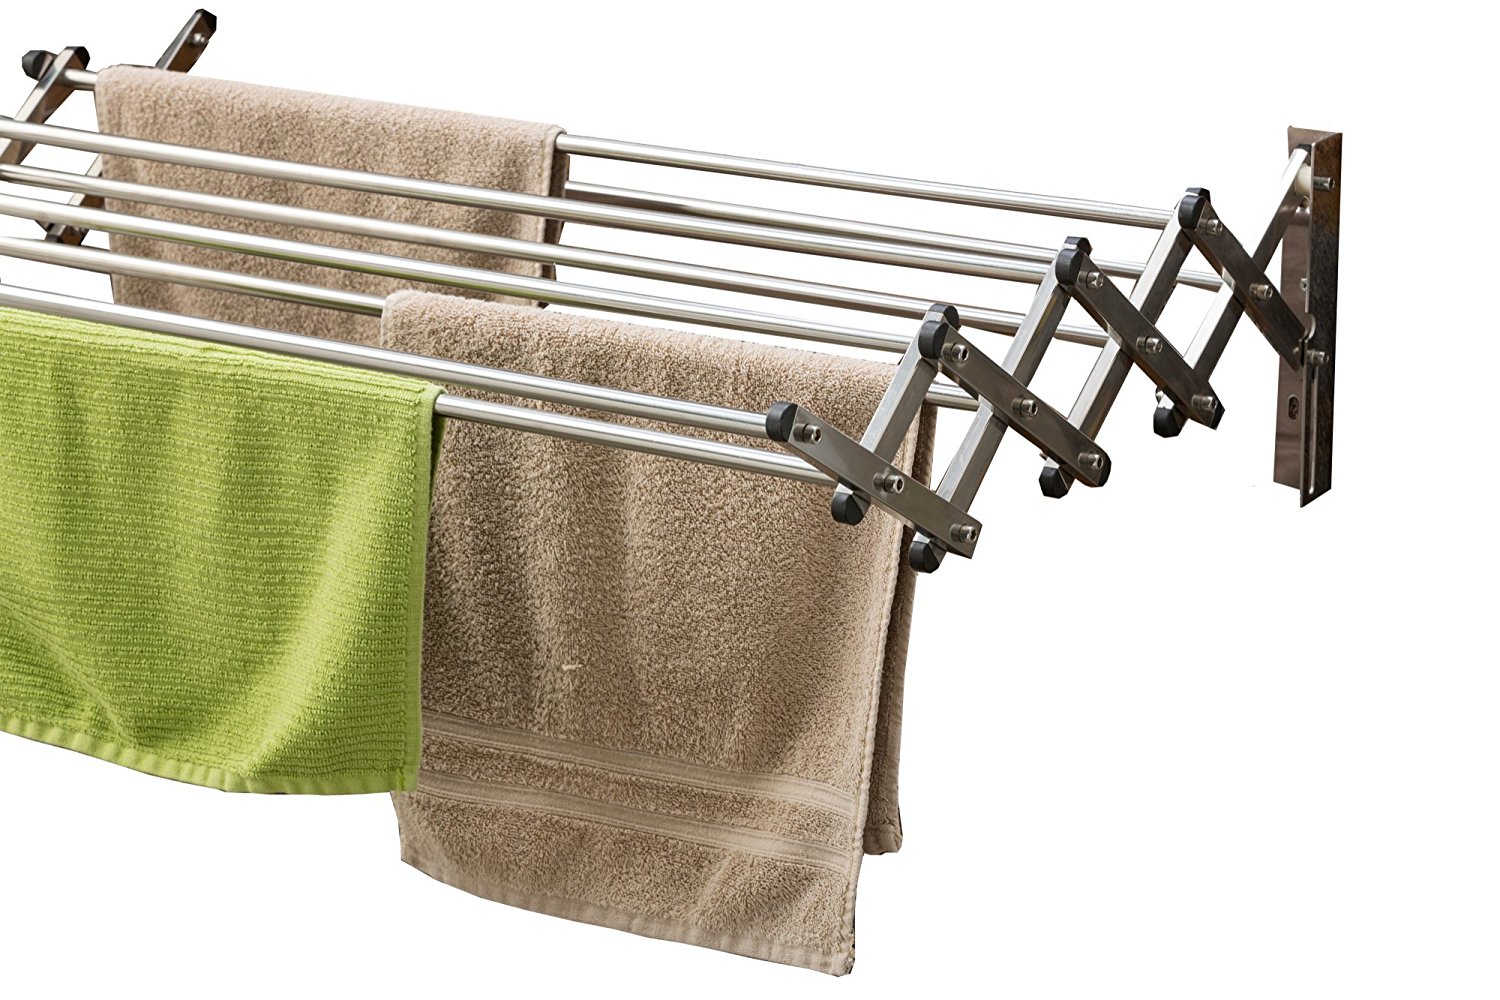 foldable clothes rack